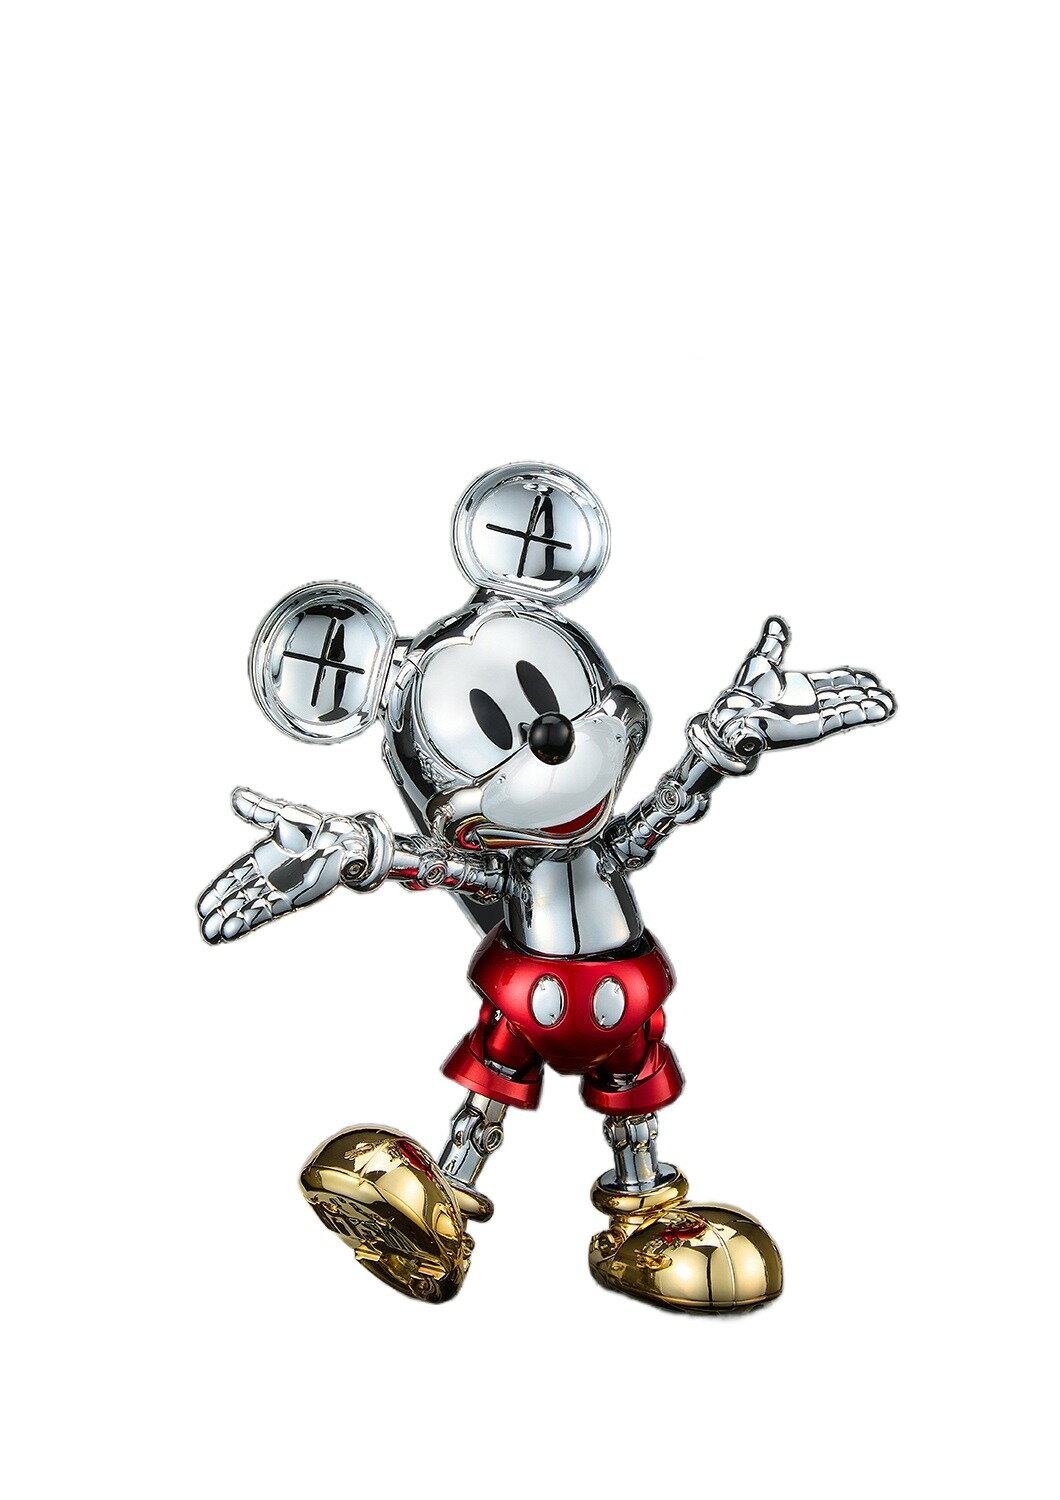 BLITZWAY ディズニー ミッキーマウス 可動 アクション フィギュア 完成品 限定クローム版 BW-CA-10508